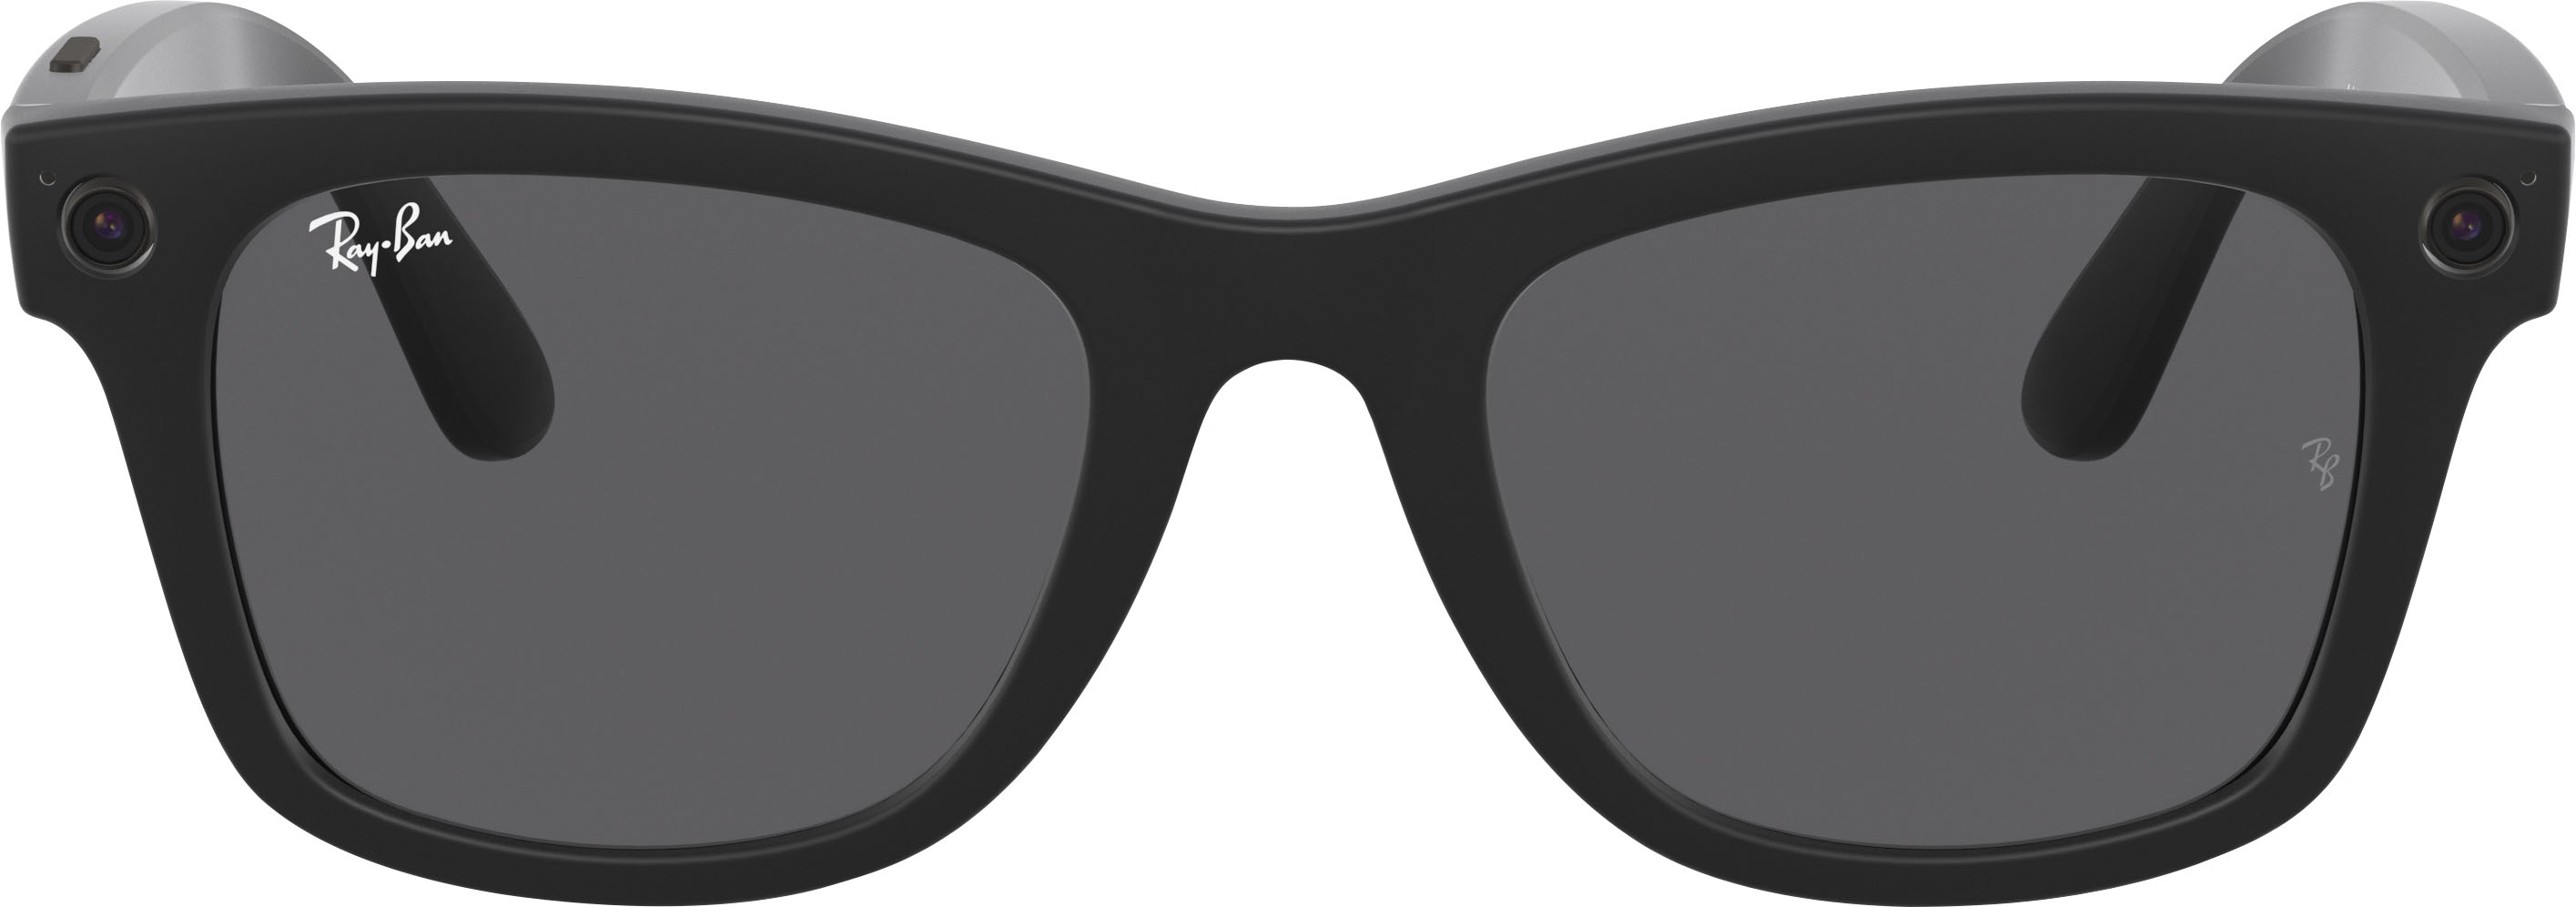 Angle View: Ray-Ban - Stories Wayfarer Smart Glasses 53mm - Matte Black/Dark Grey